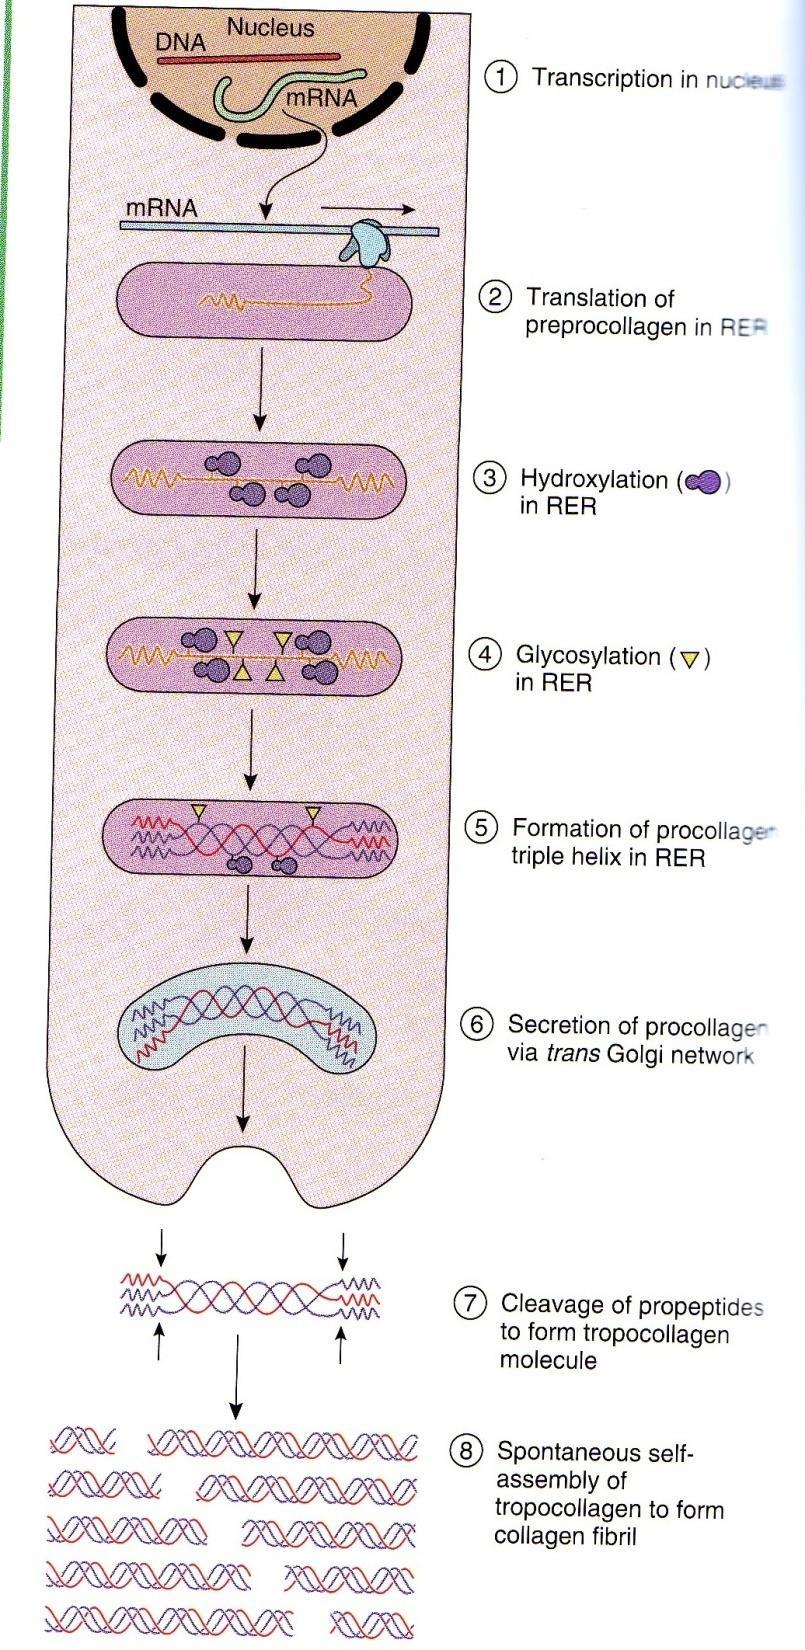 Intracellular * Transcription (Nucleus). * Translation (rer). * Hydroxylation (rer). * Glycosylation (rer & Golgi).